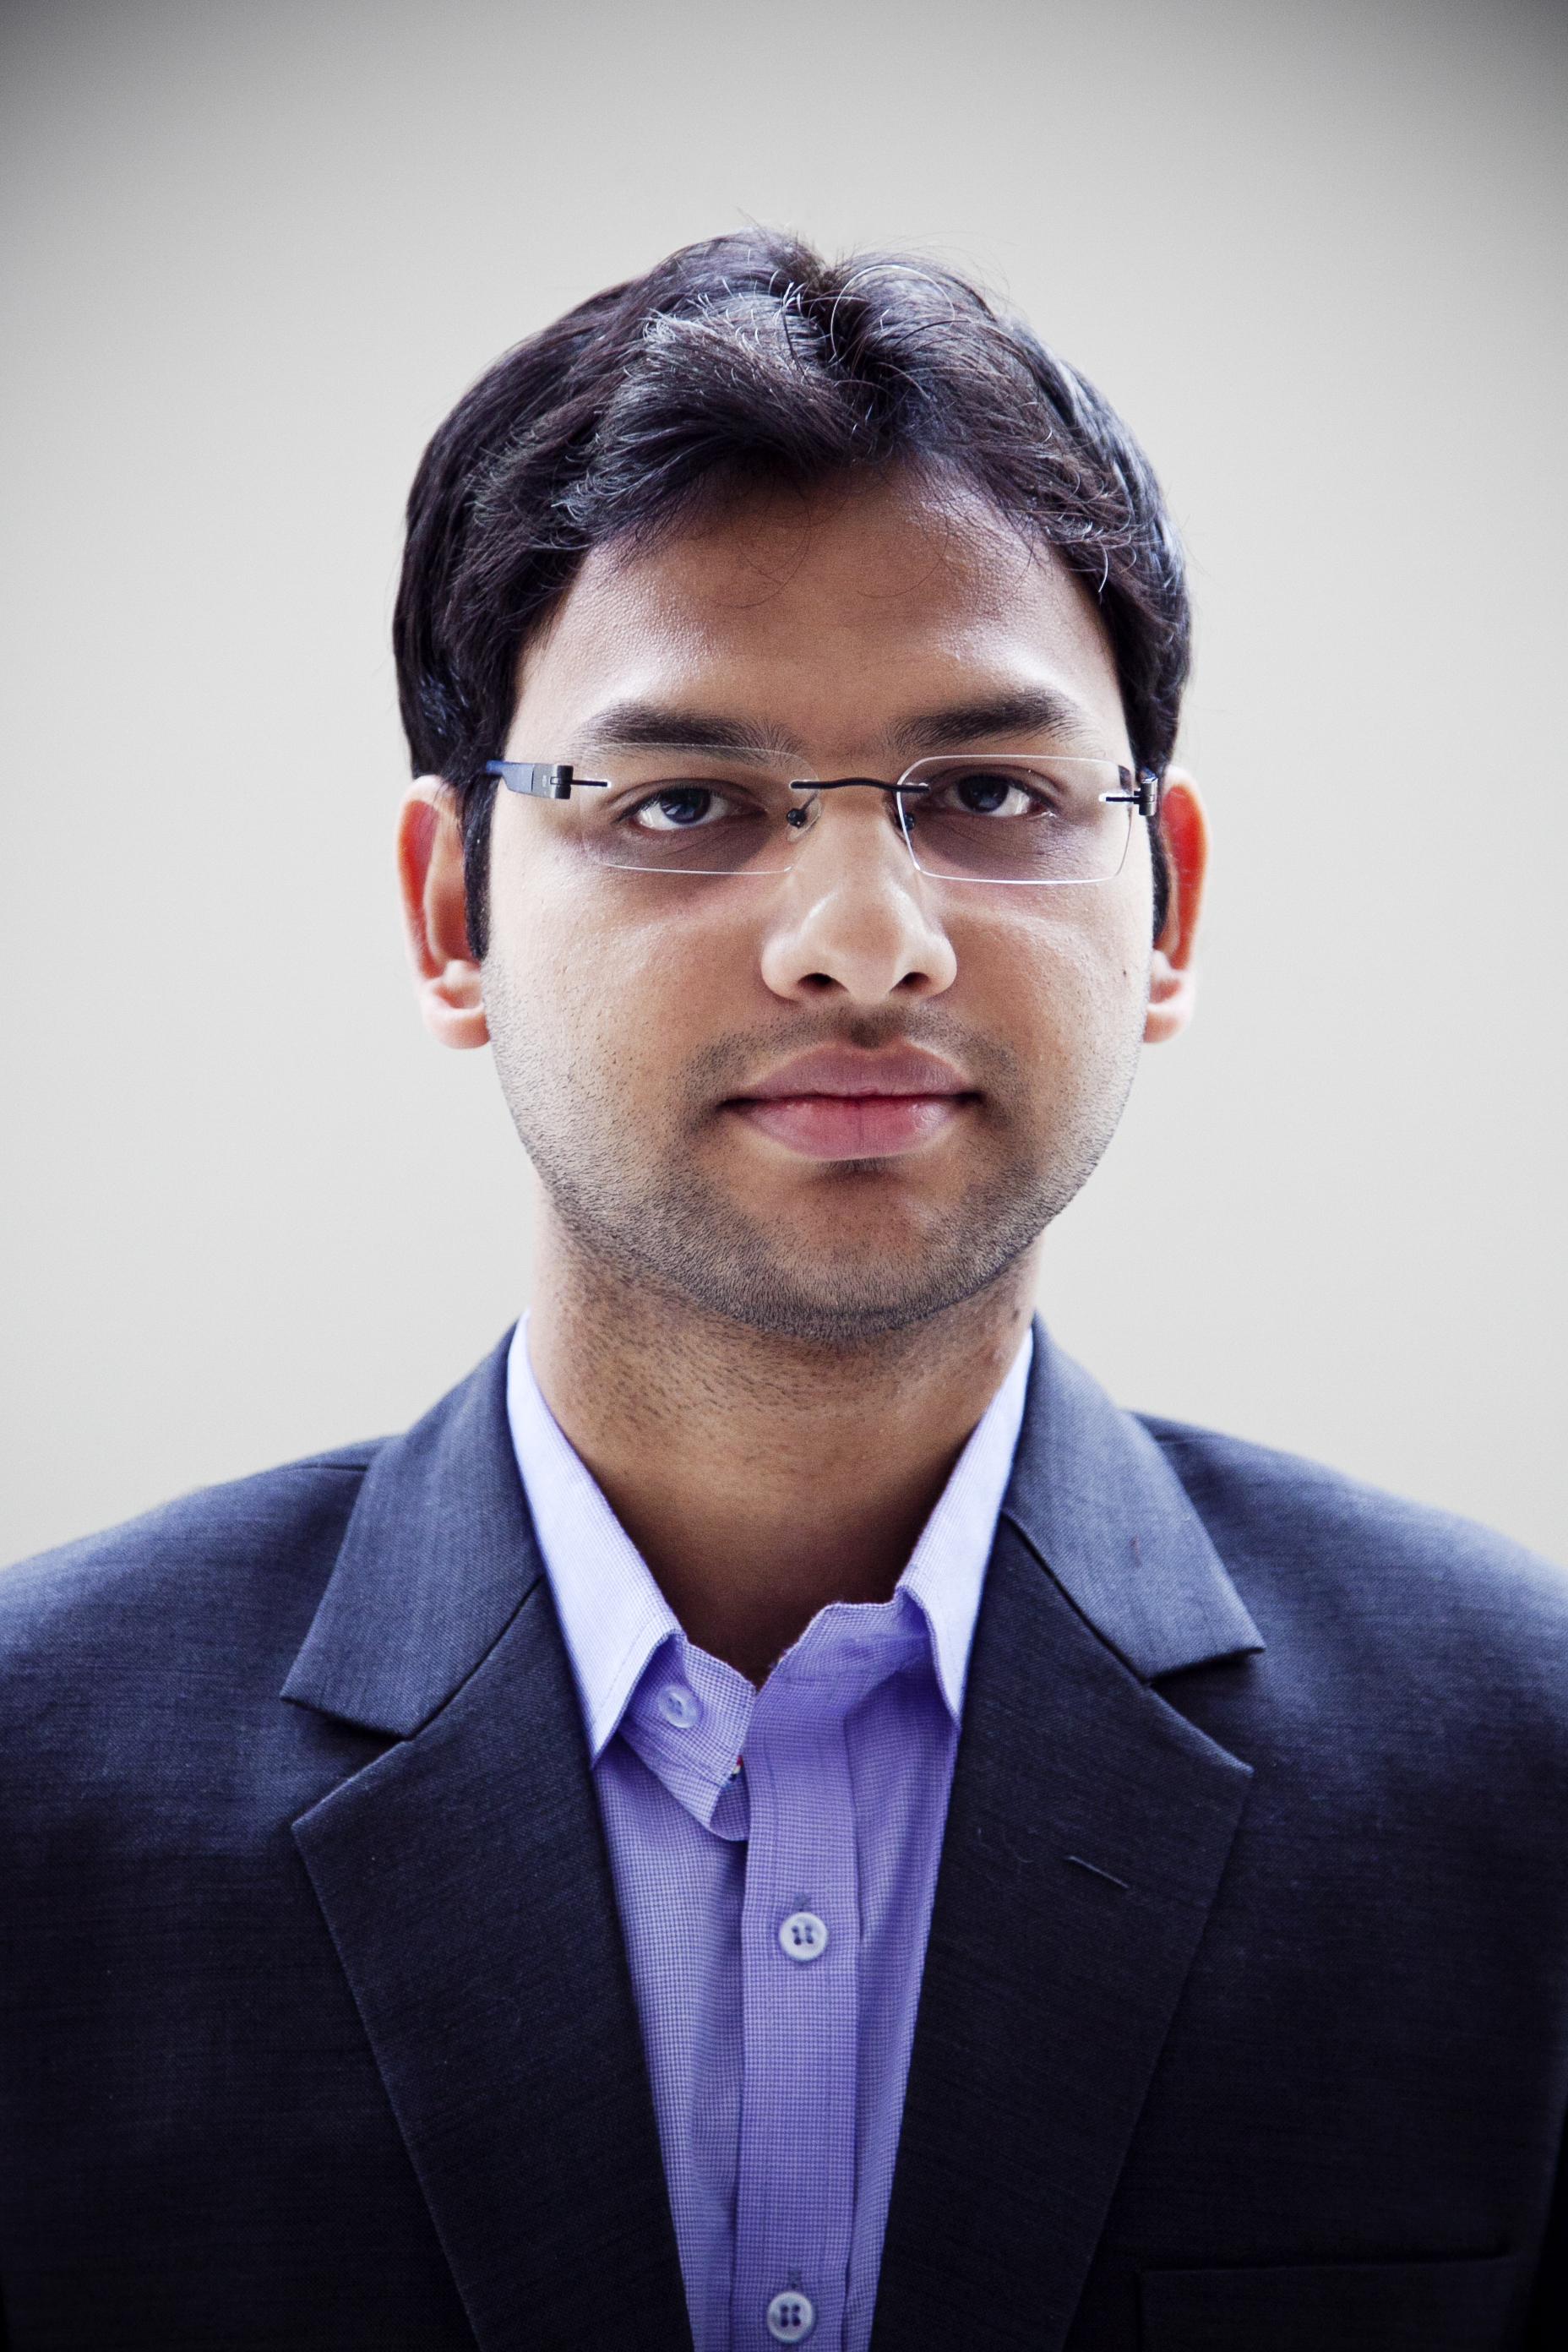 Student intern, Tuhin Das